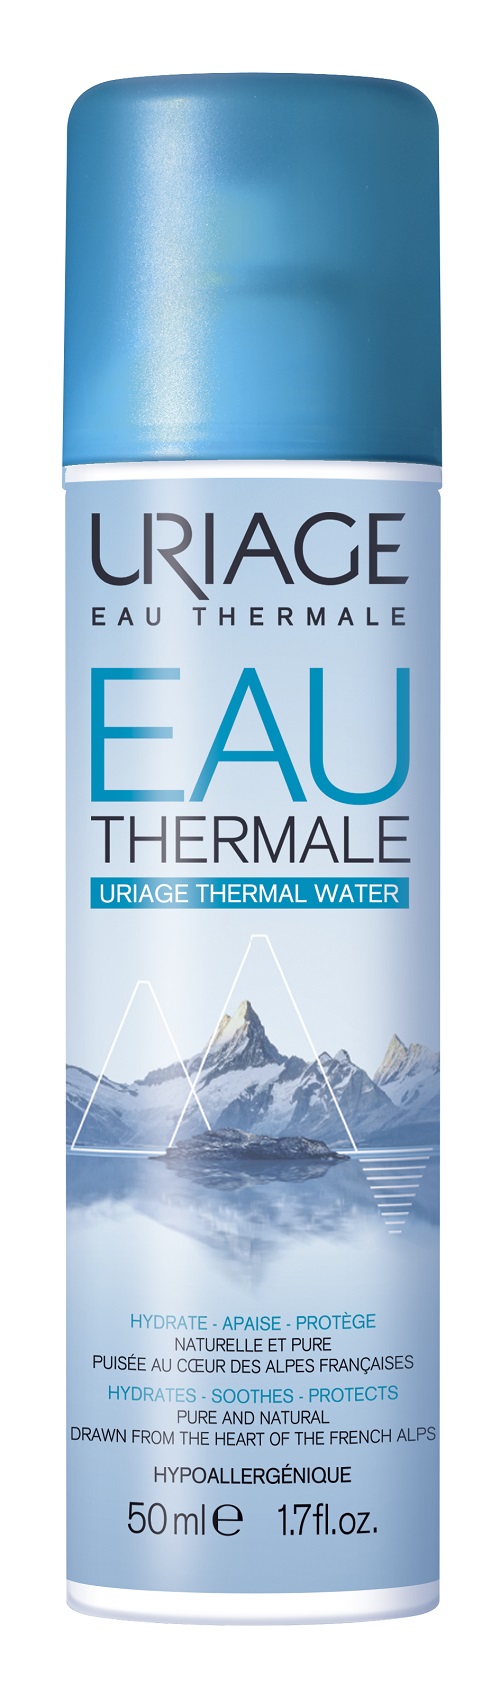 URIAGE Eau Thermale D'Uriage termálvíz spray 50 ml